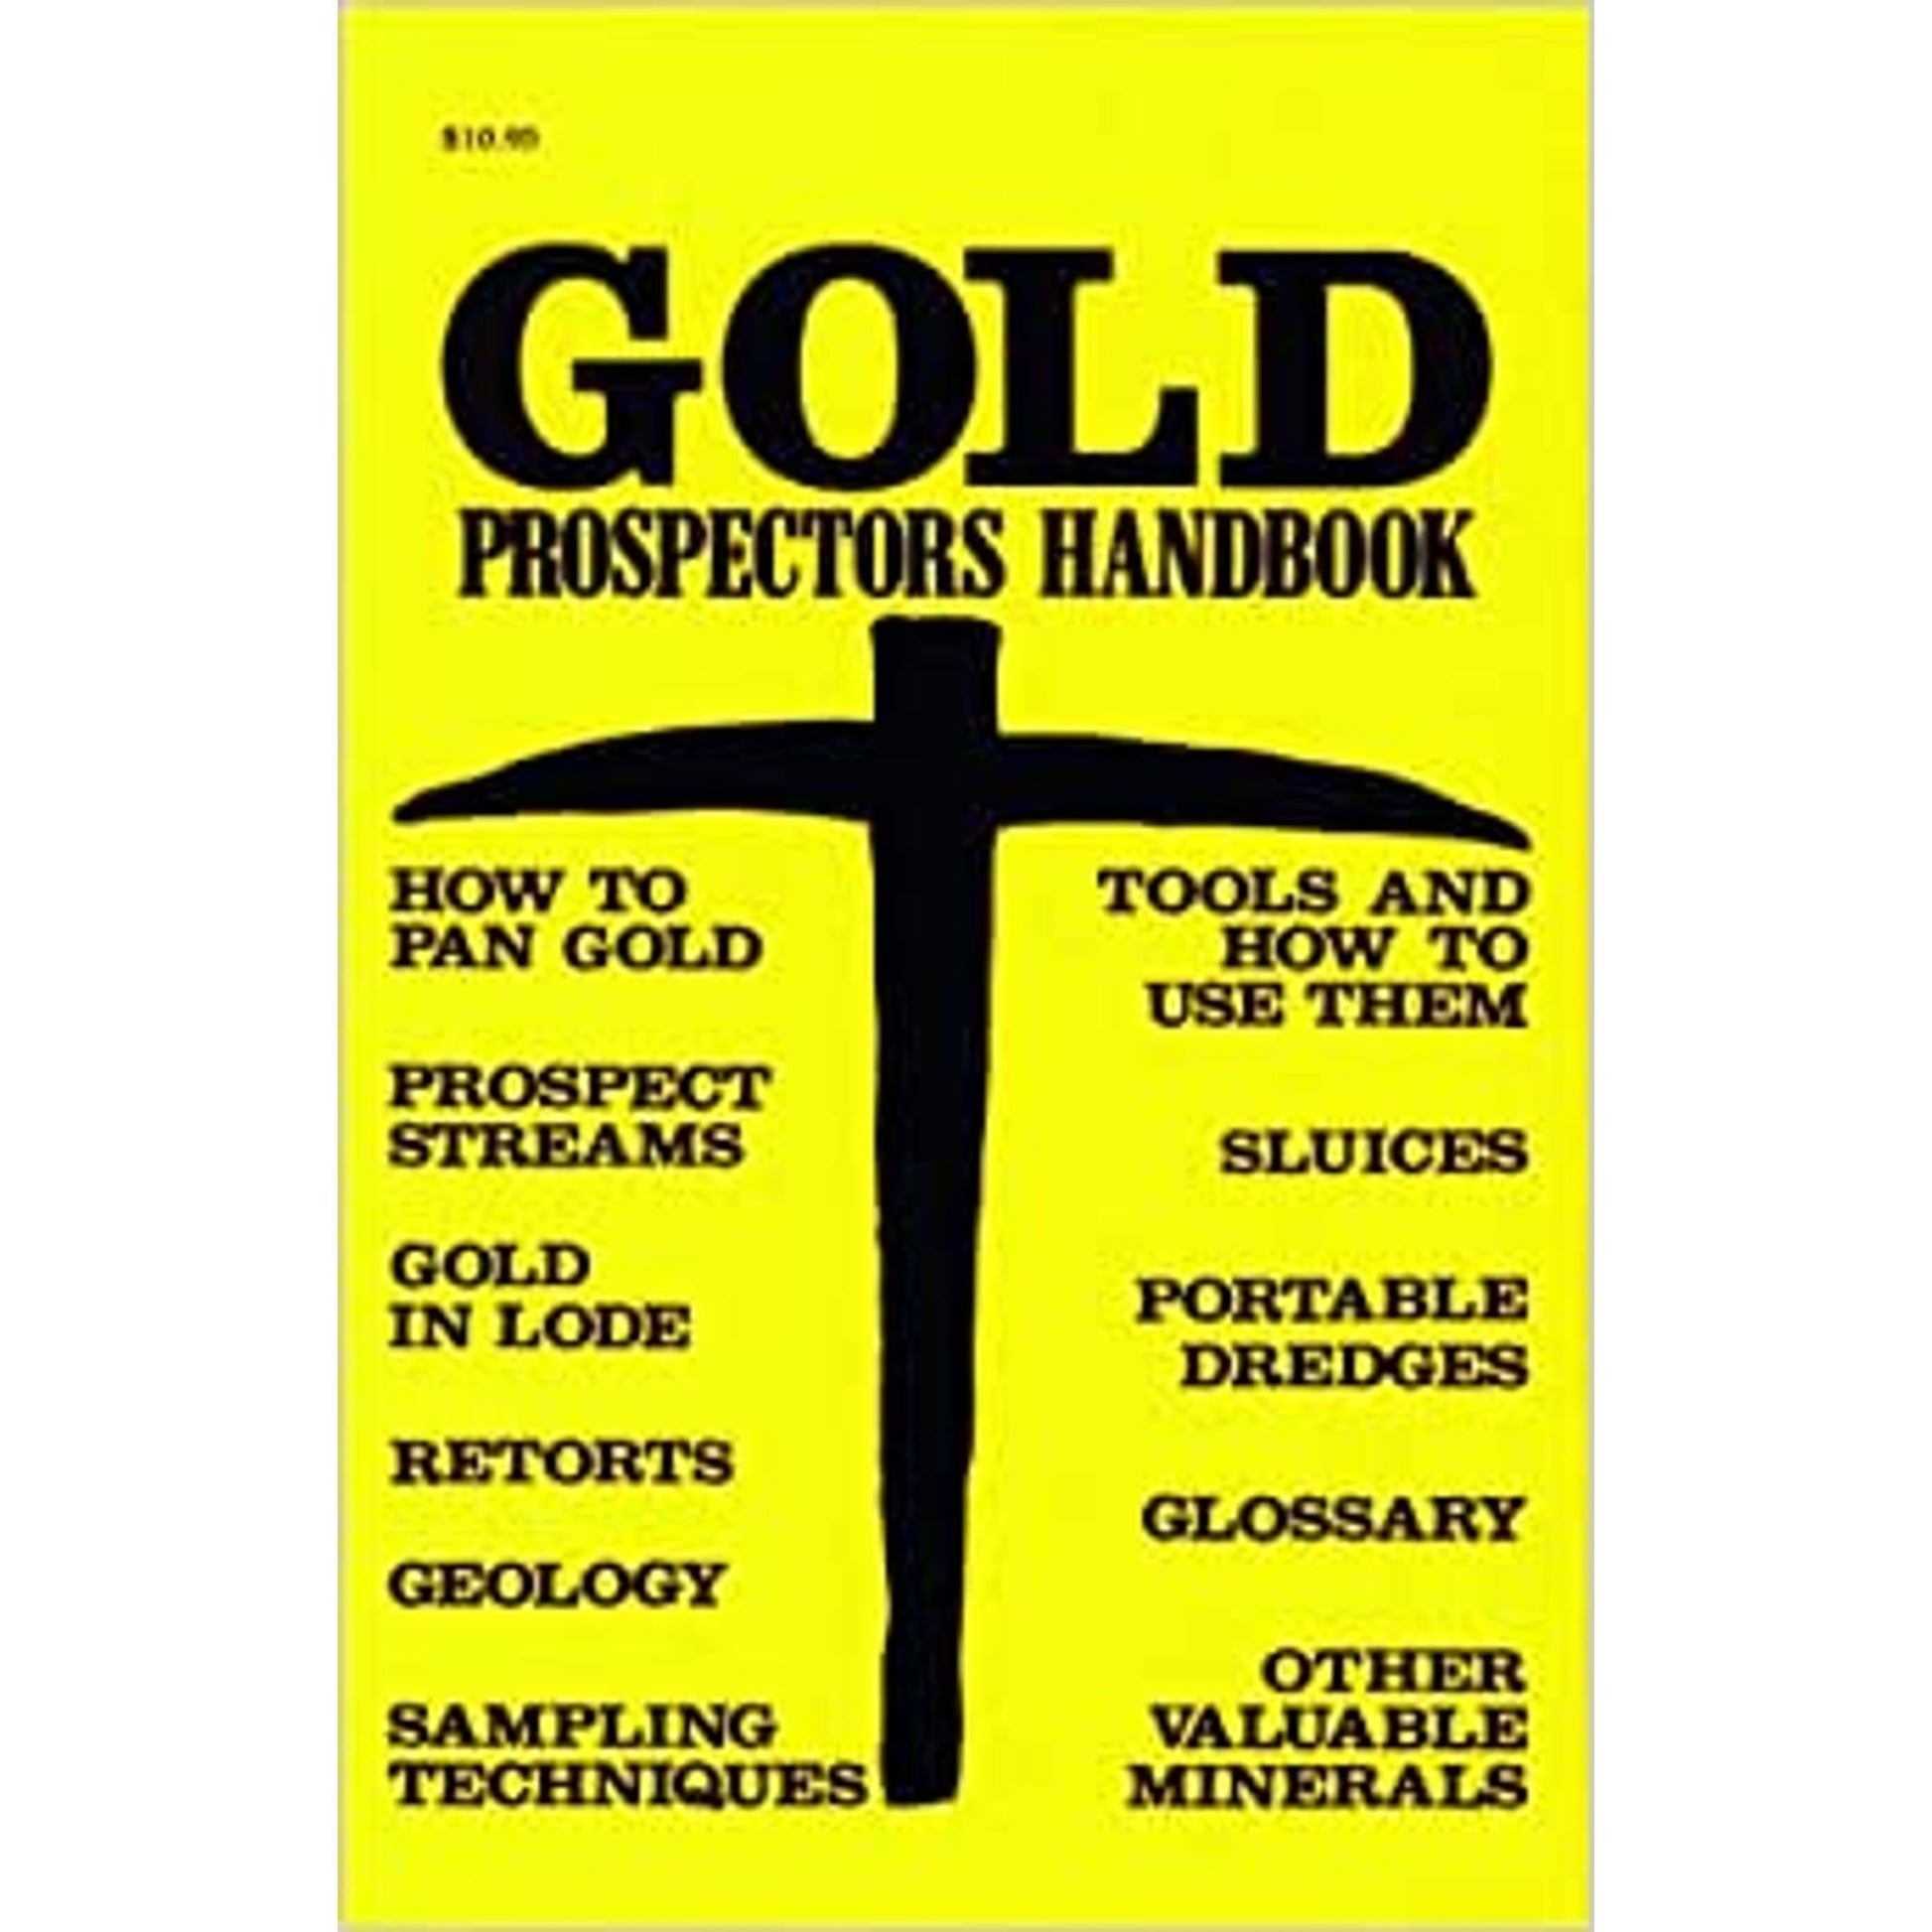 Gold Prospectors Handbook